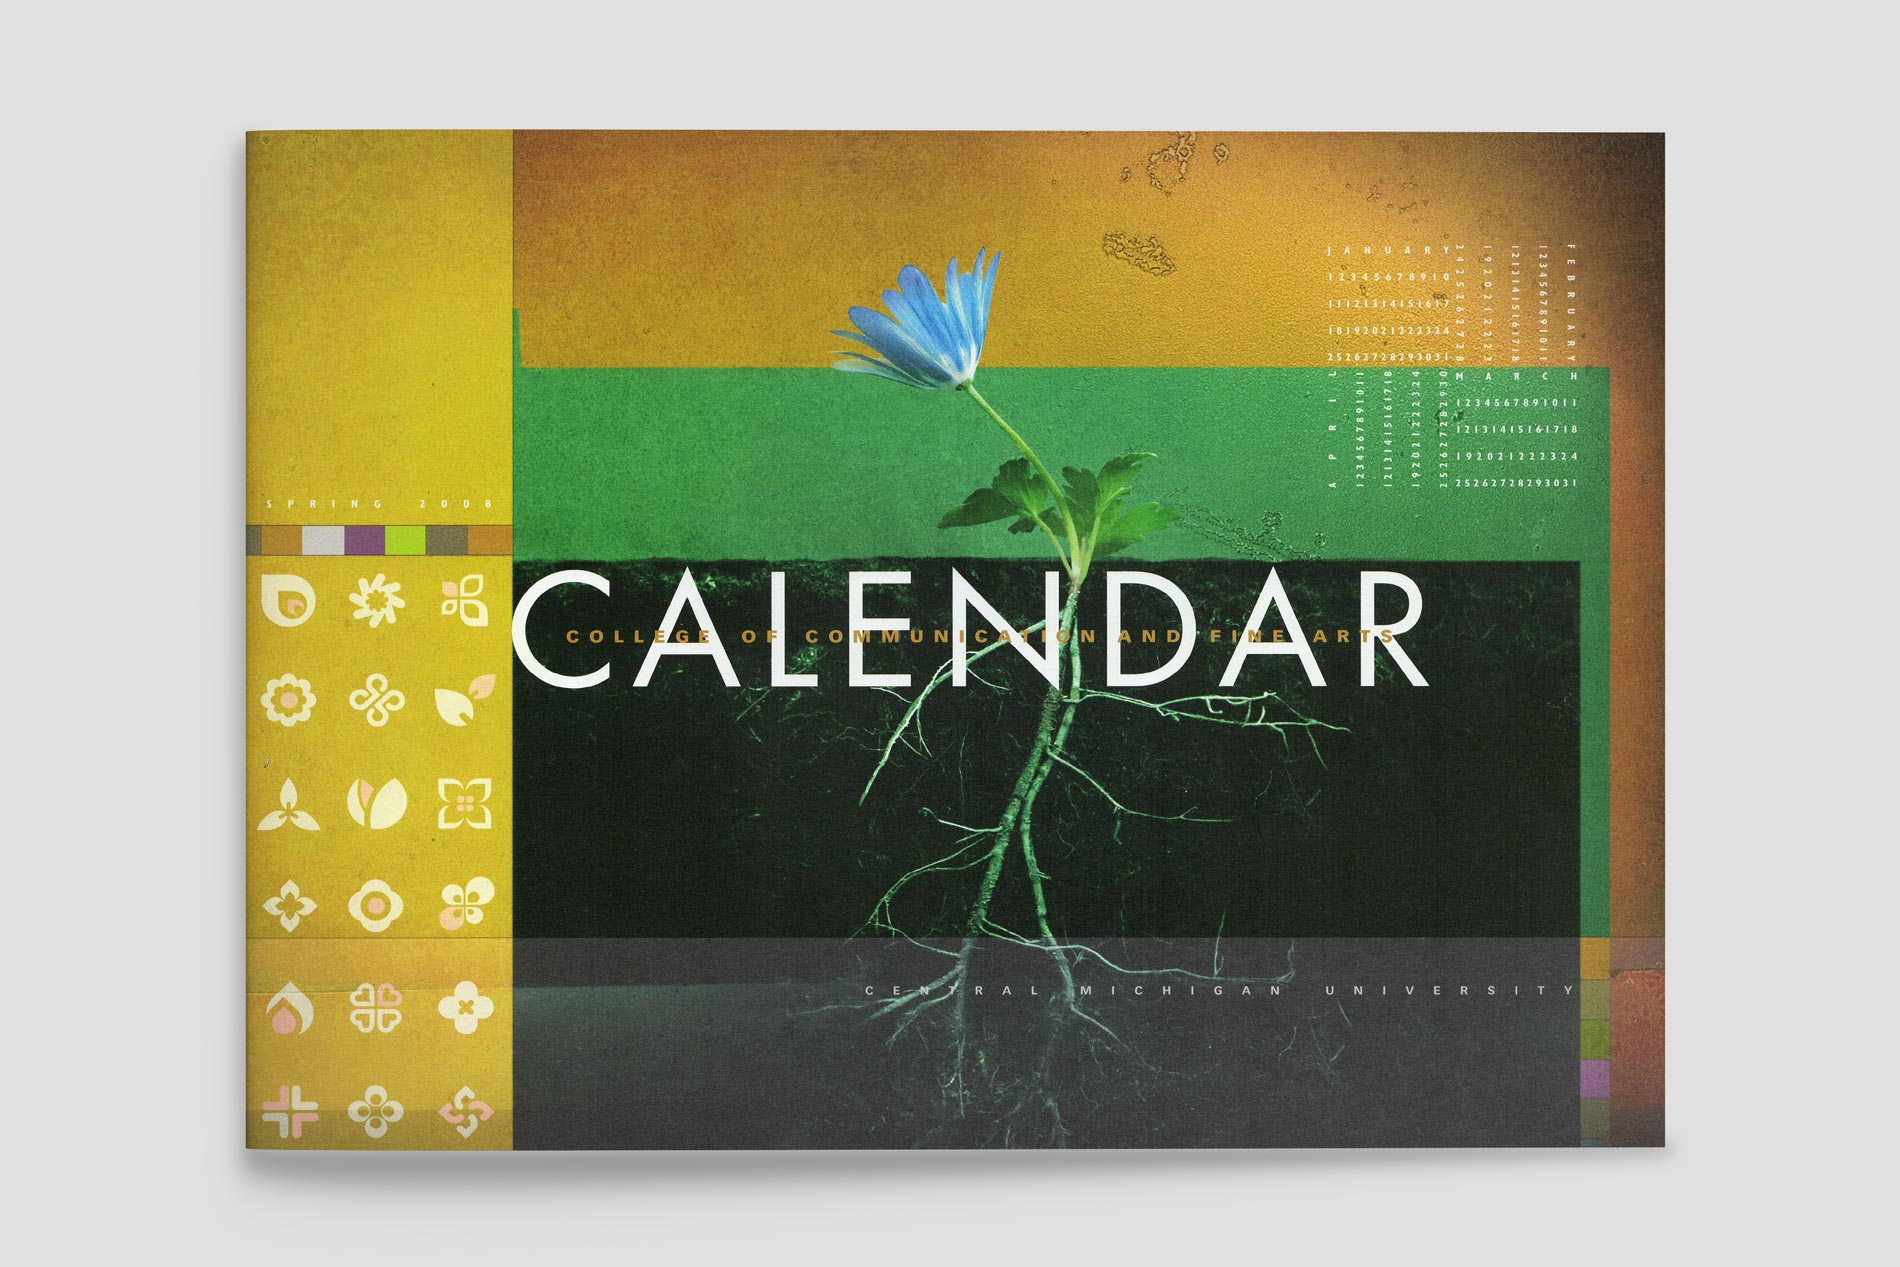 ip CMU Central Michigan University literature calendar cover 2 mockup by Design Direction ClarkMost